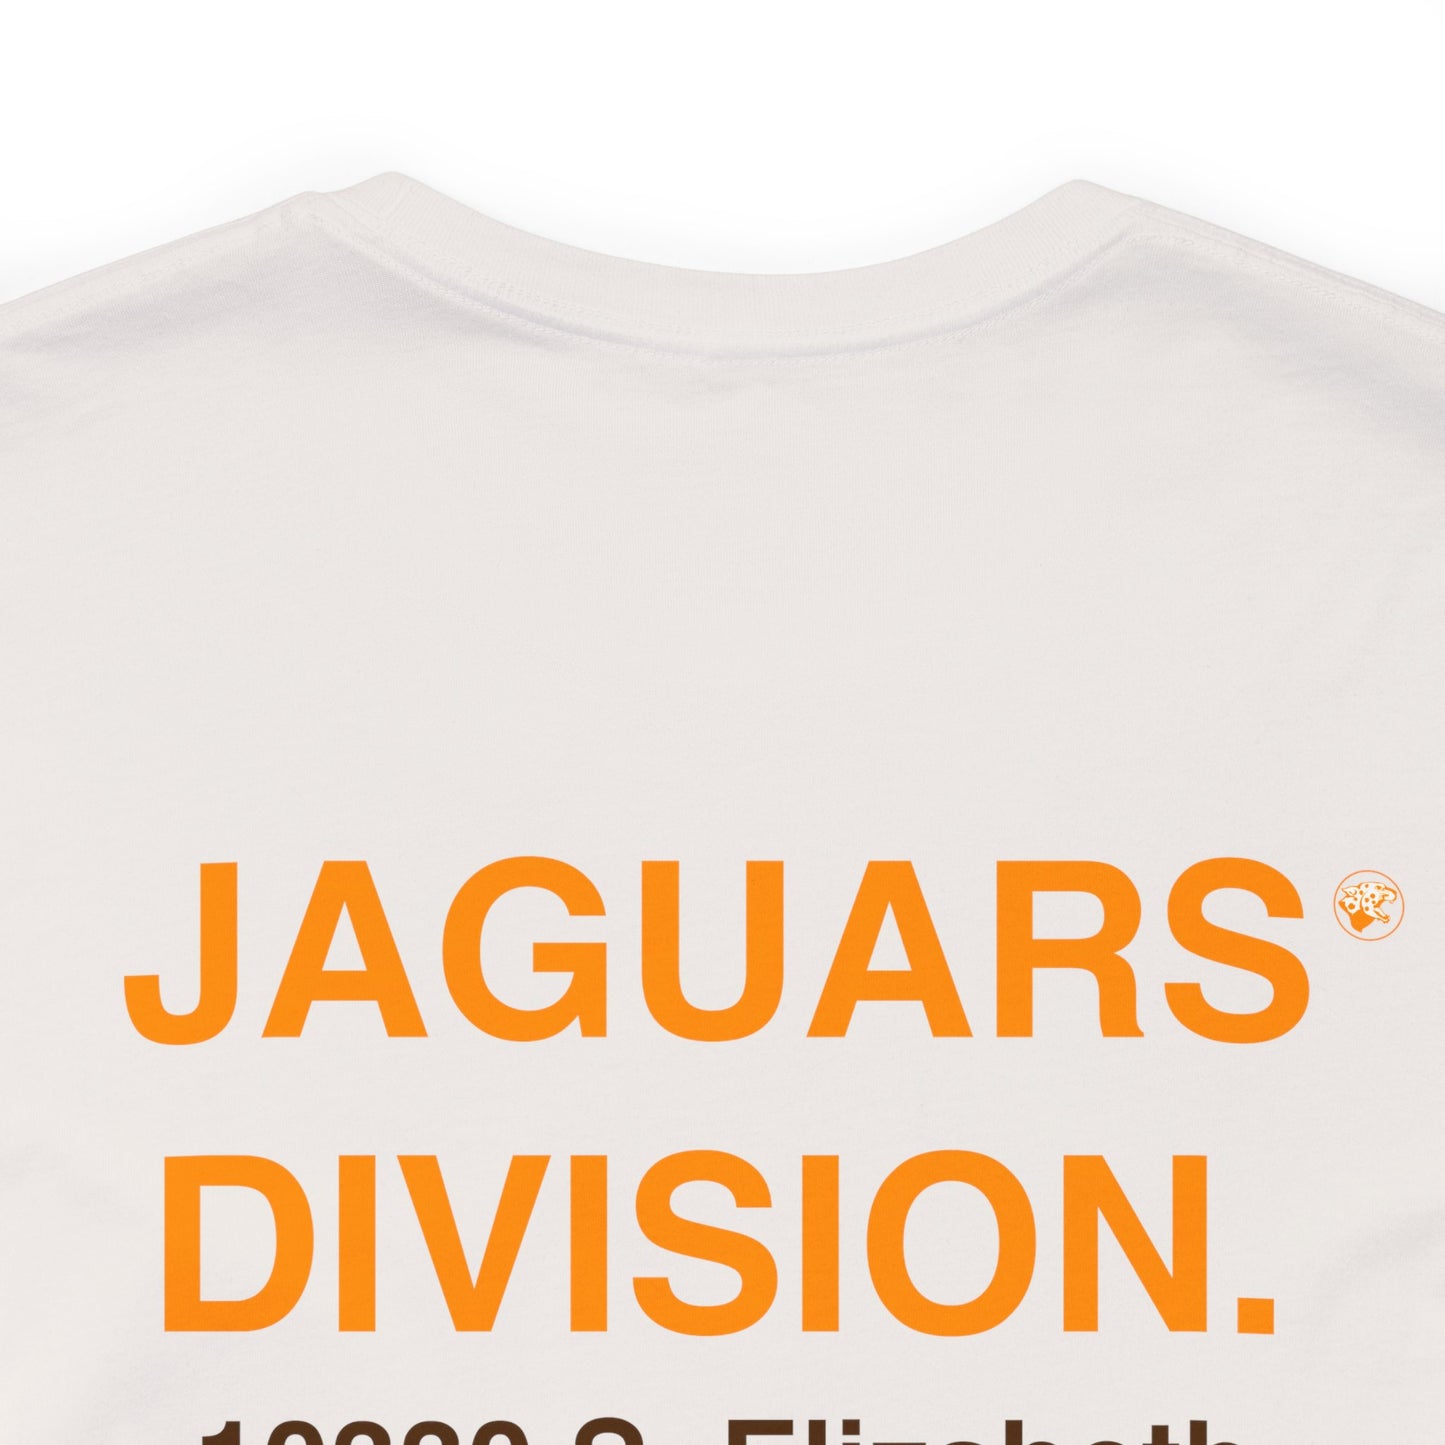 Julian Jaguars | Percy L. Julian High School Tee Shirt